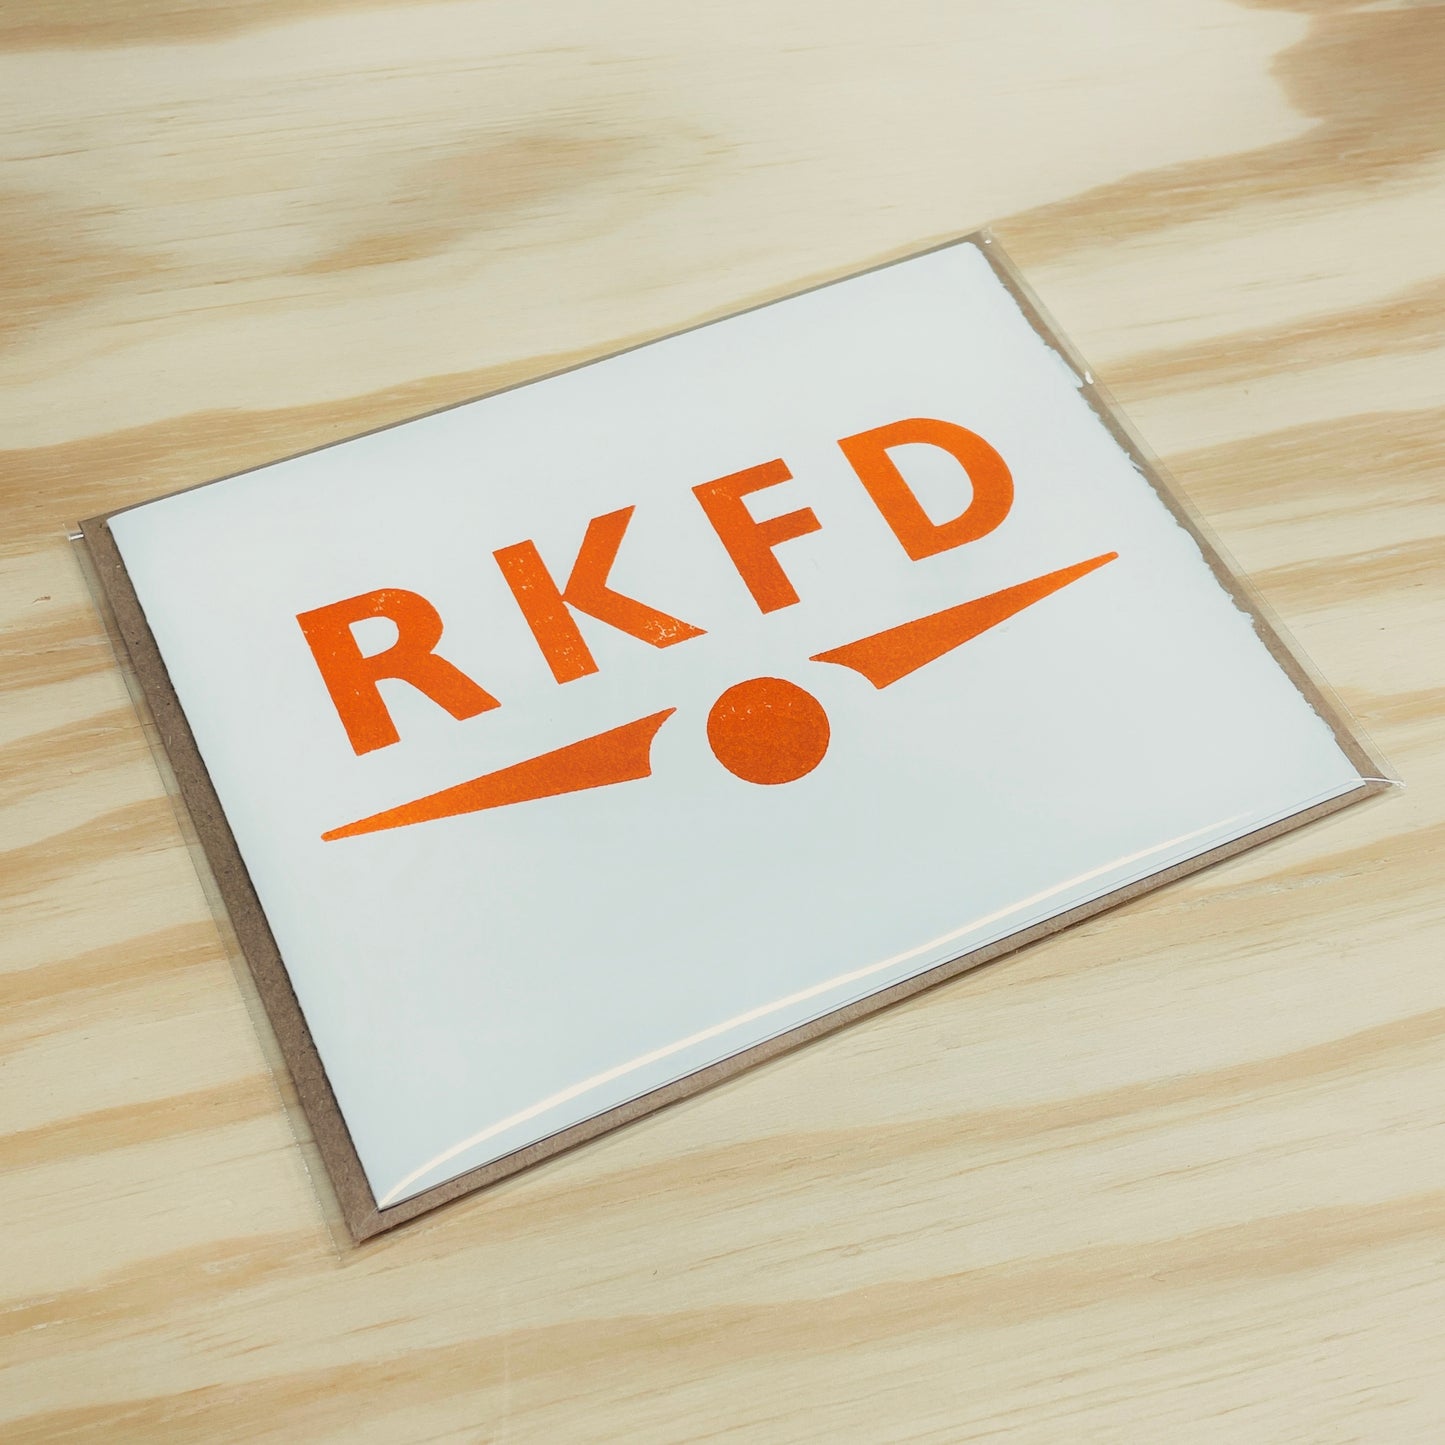 RKFD Rockford Orange single card - wood type letterpress printed